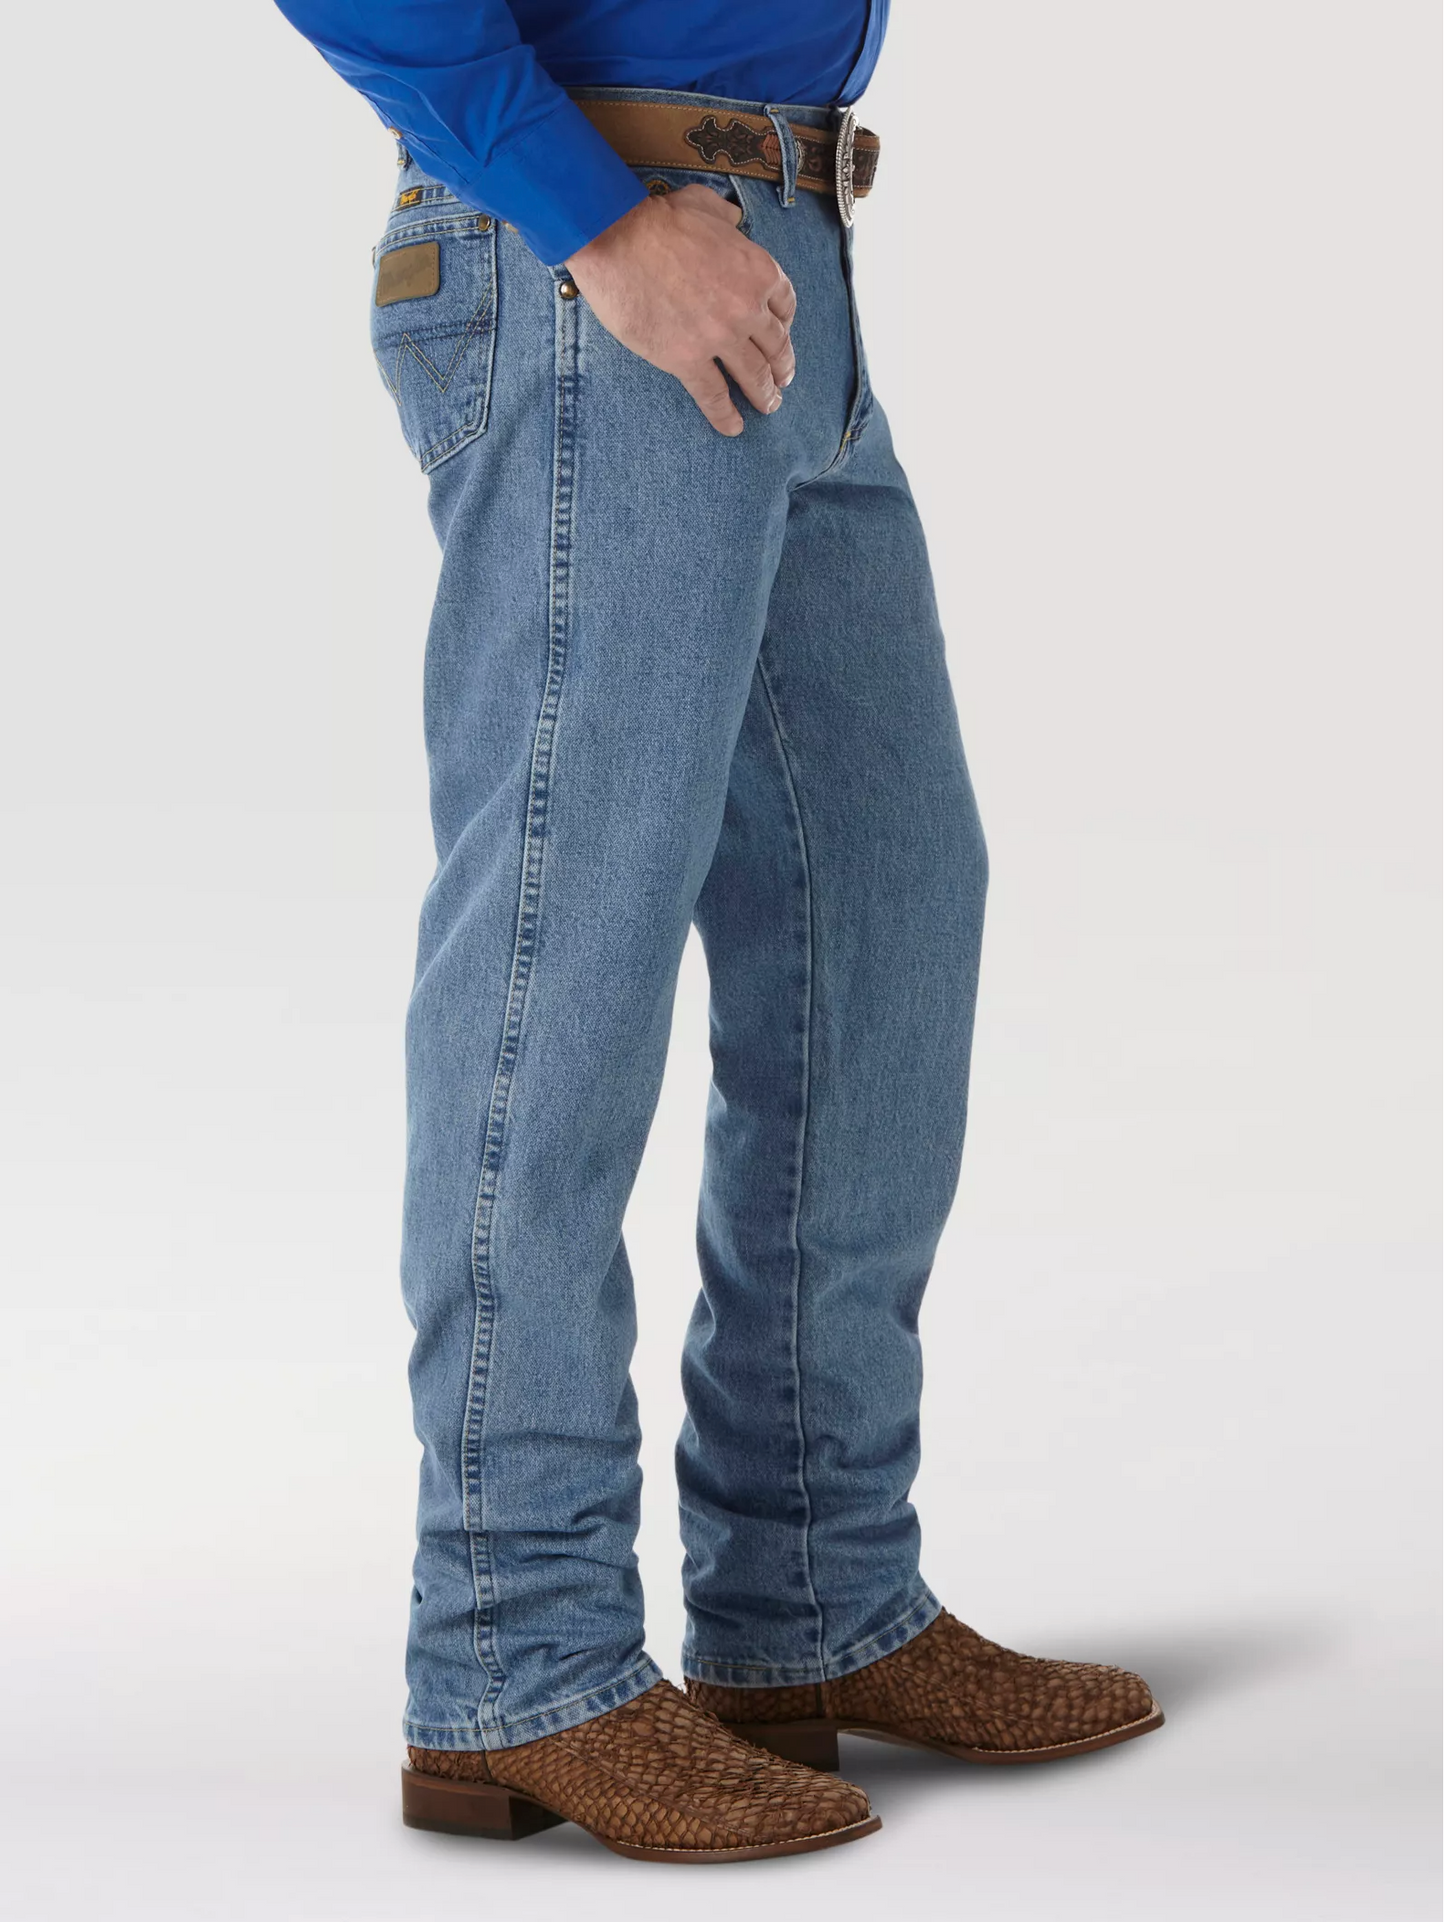 Men's George Strait CowboyCut Original fit Jean In Stone Wash